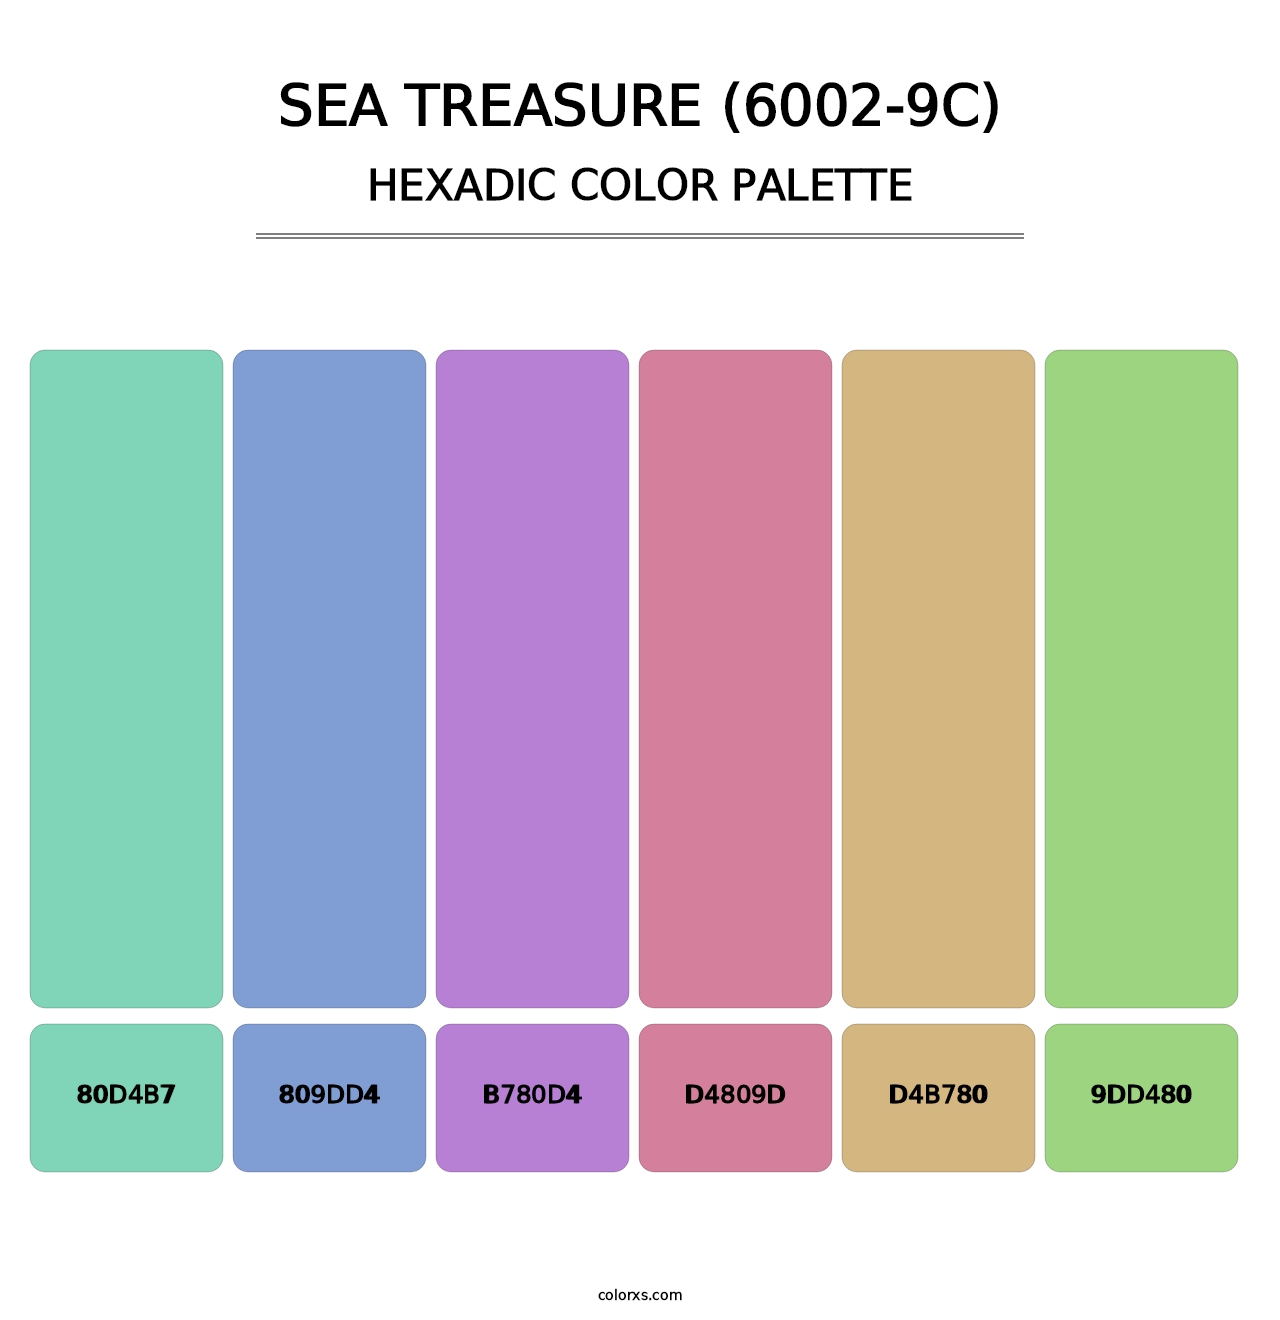 Sea Treasure (6002-9C) - Hexadic Color Palette